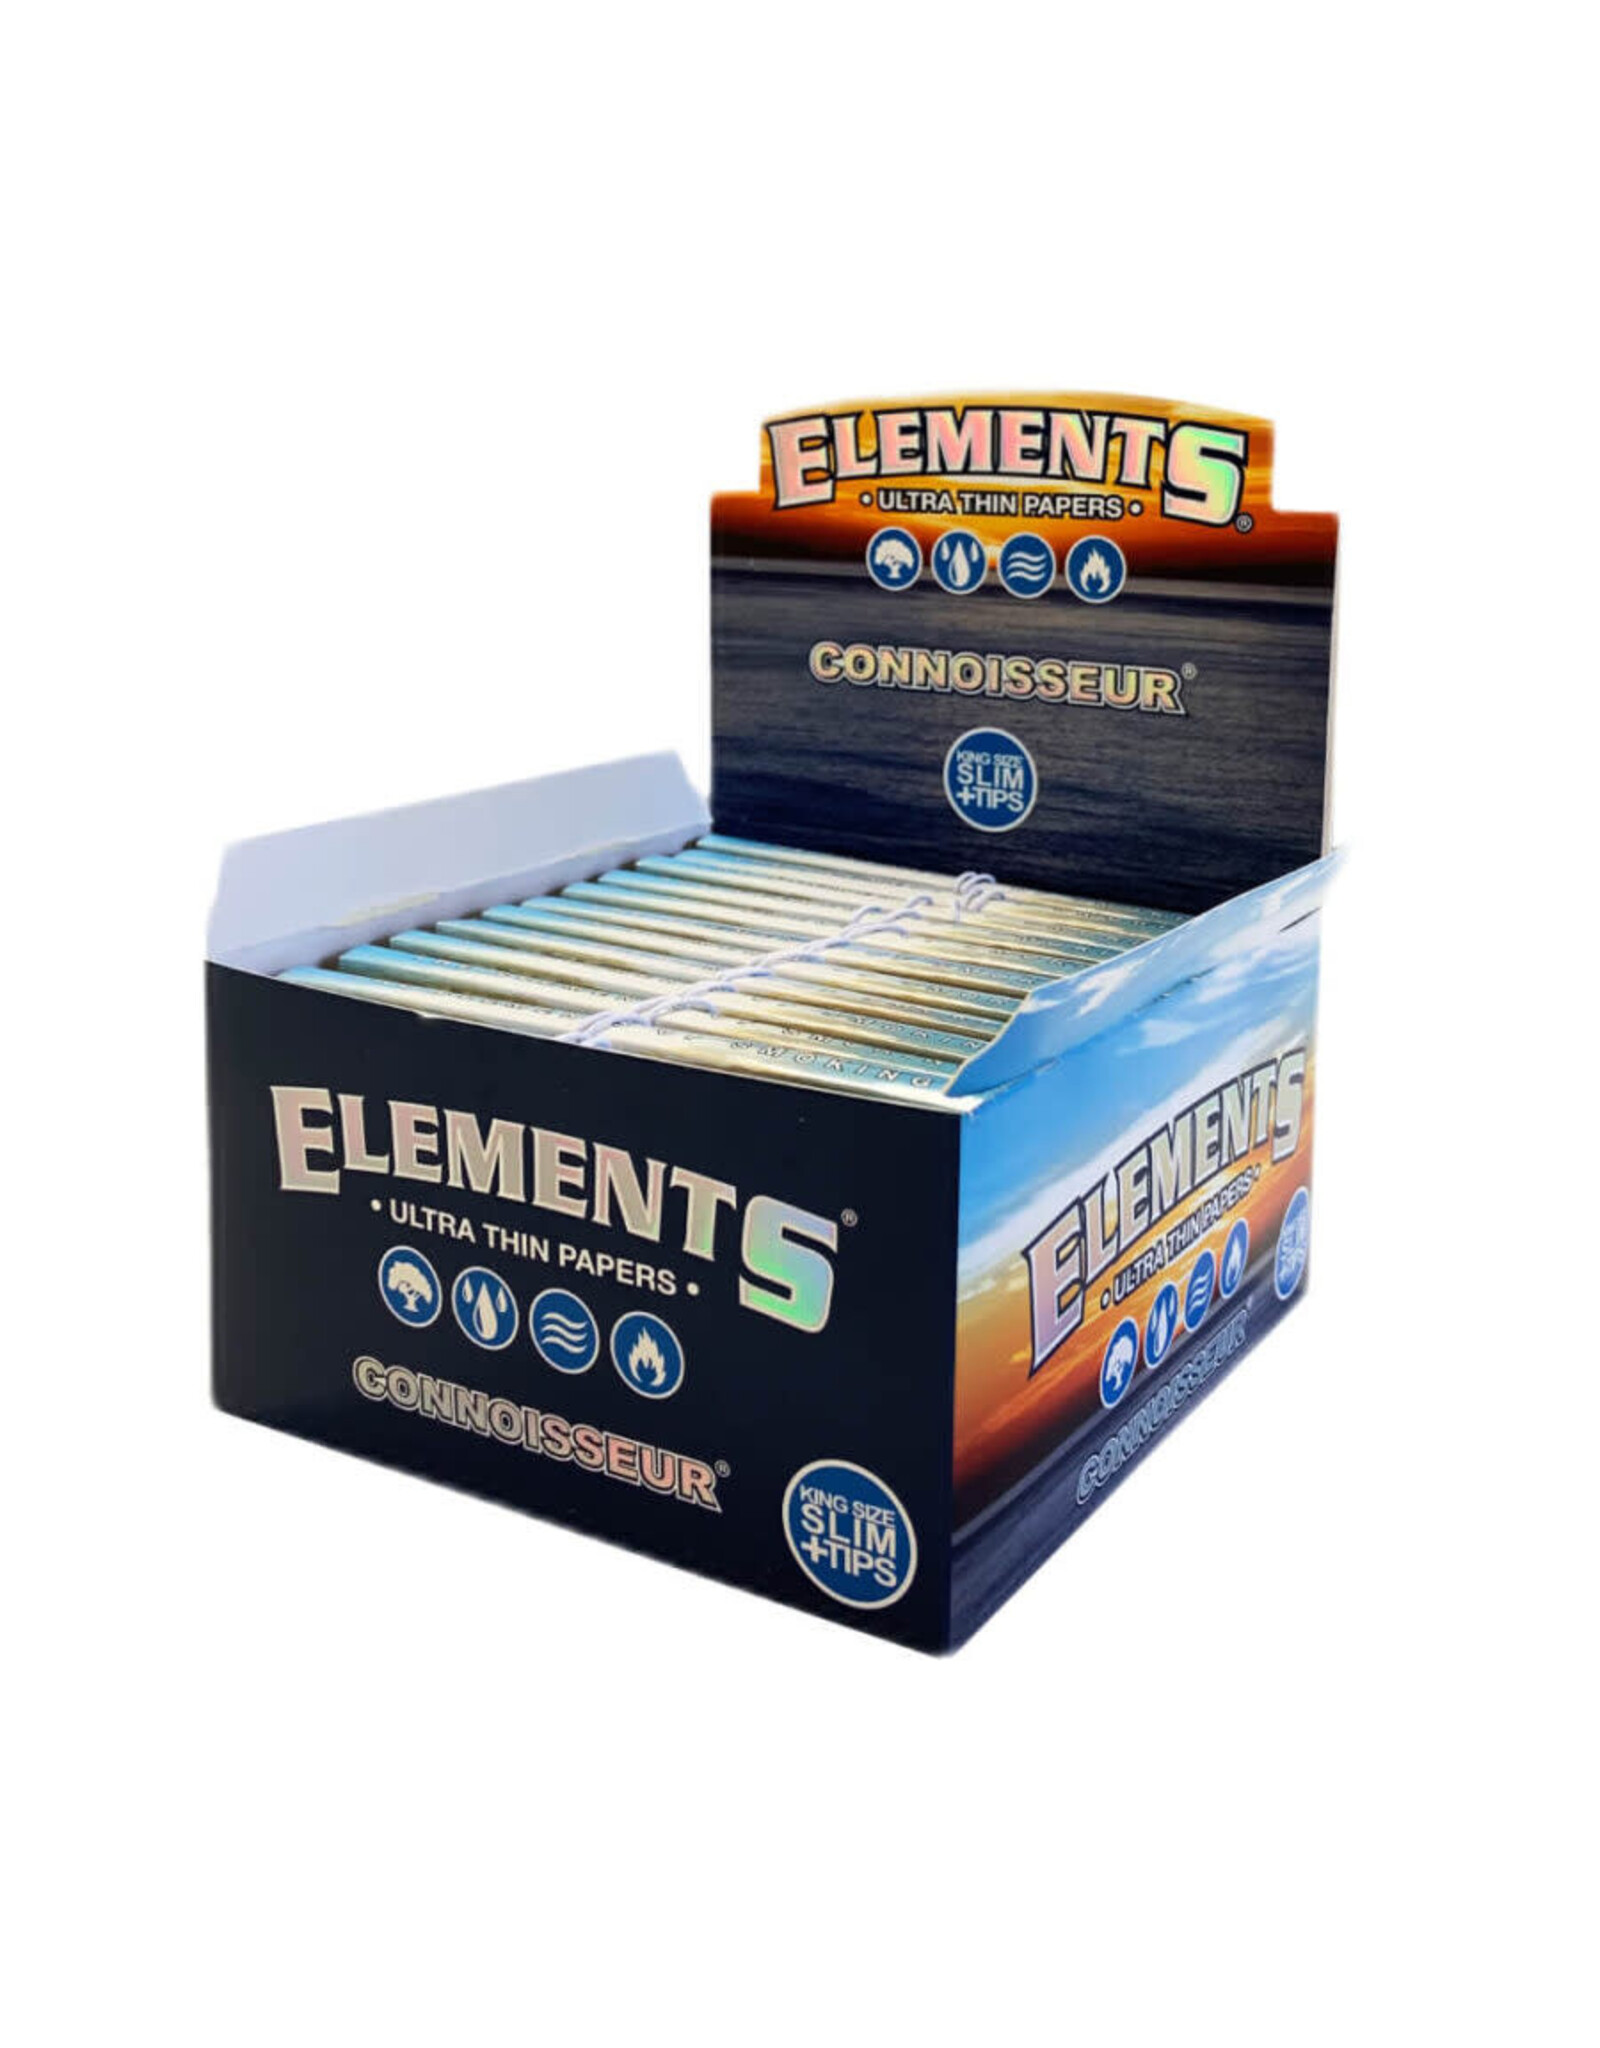 Elements Elements Connoisseur Kingsize Slim Rolling Papers + Tips